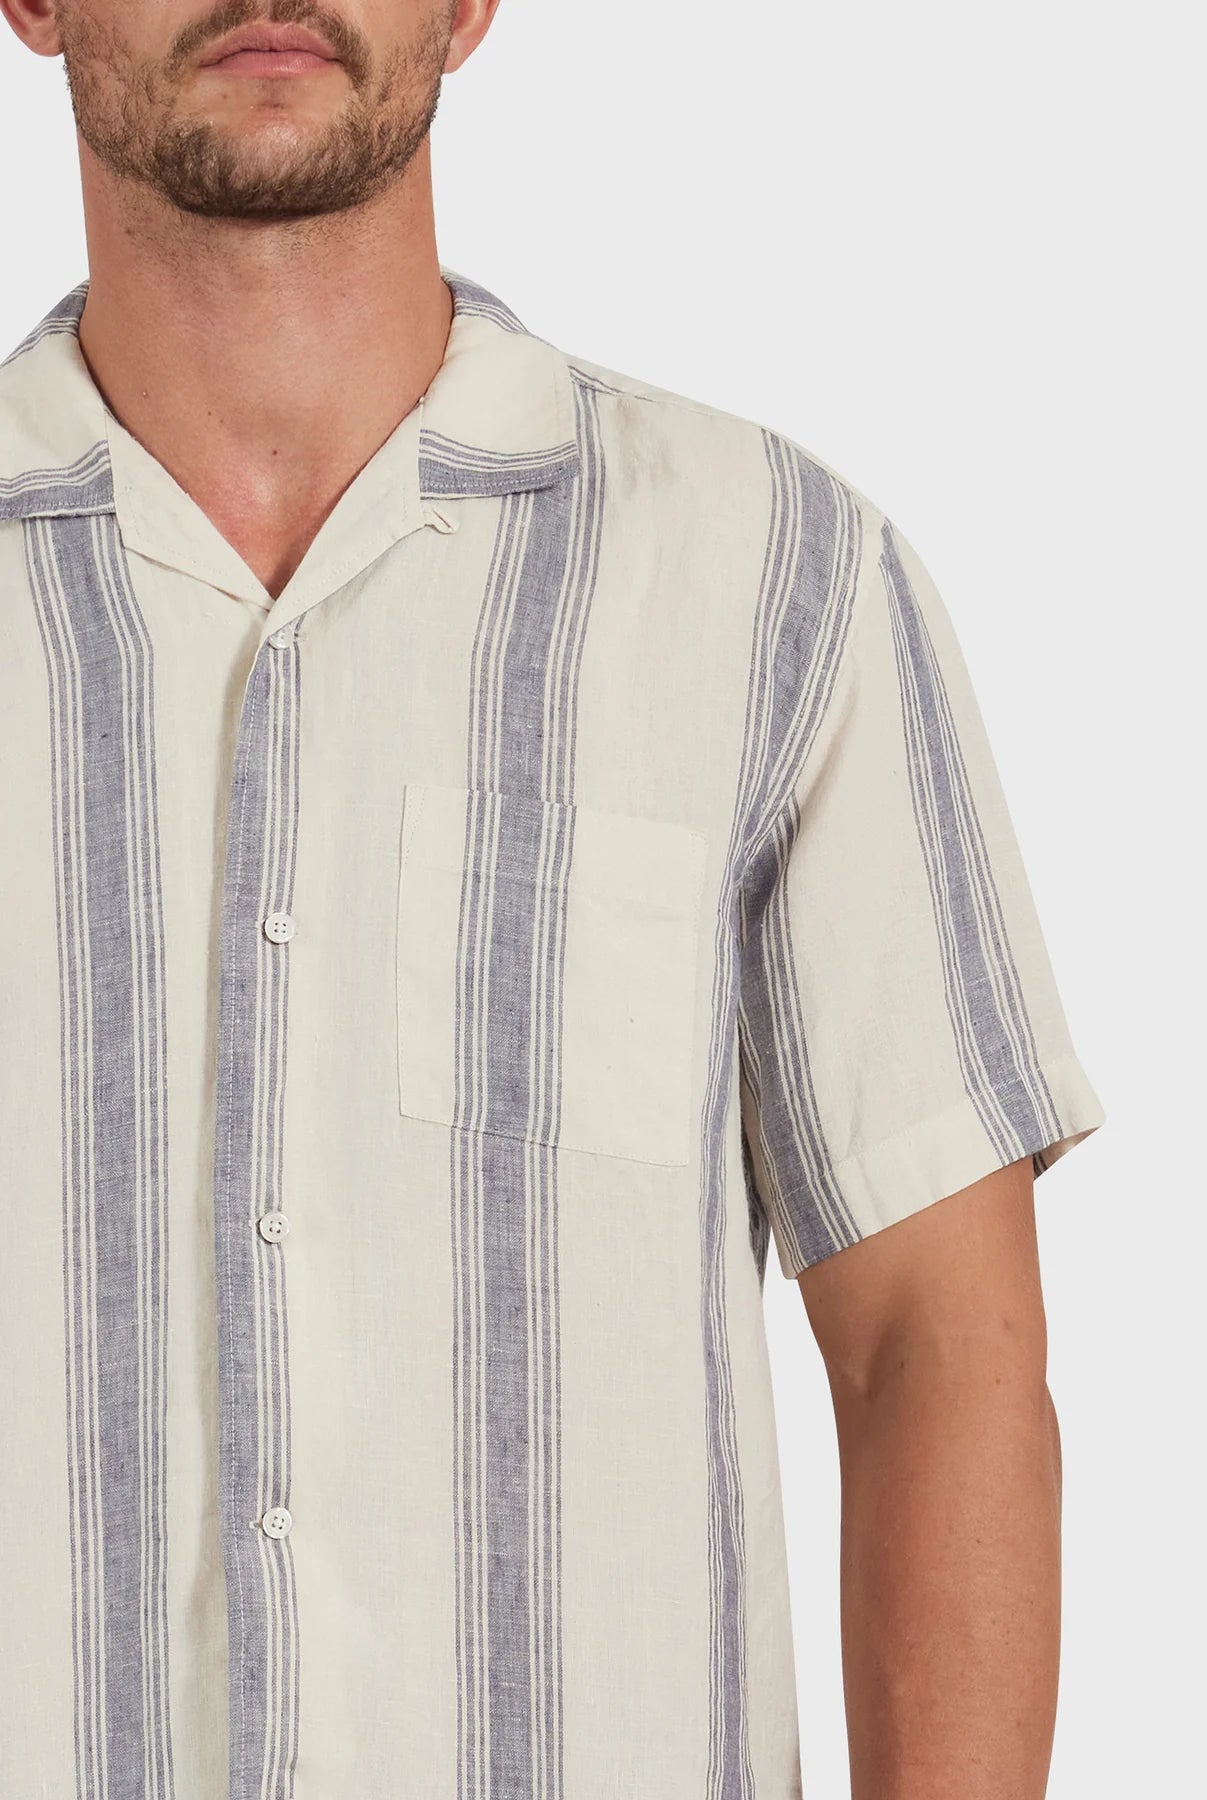 Driftwood Short Sleeve Shirt in Navy Stripe